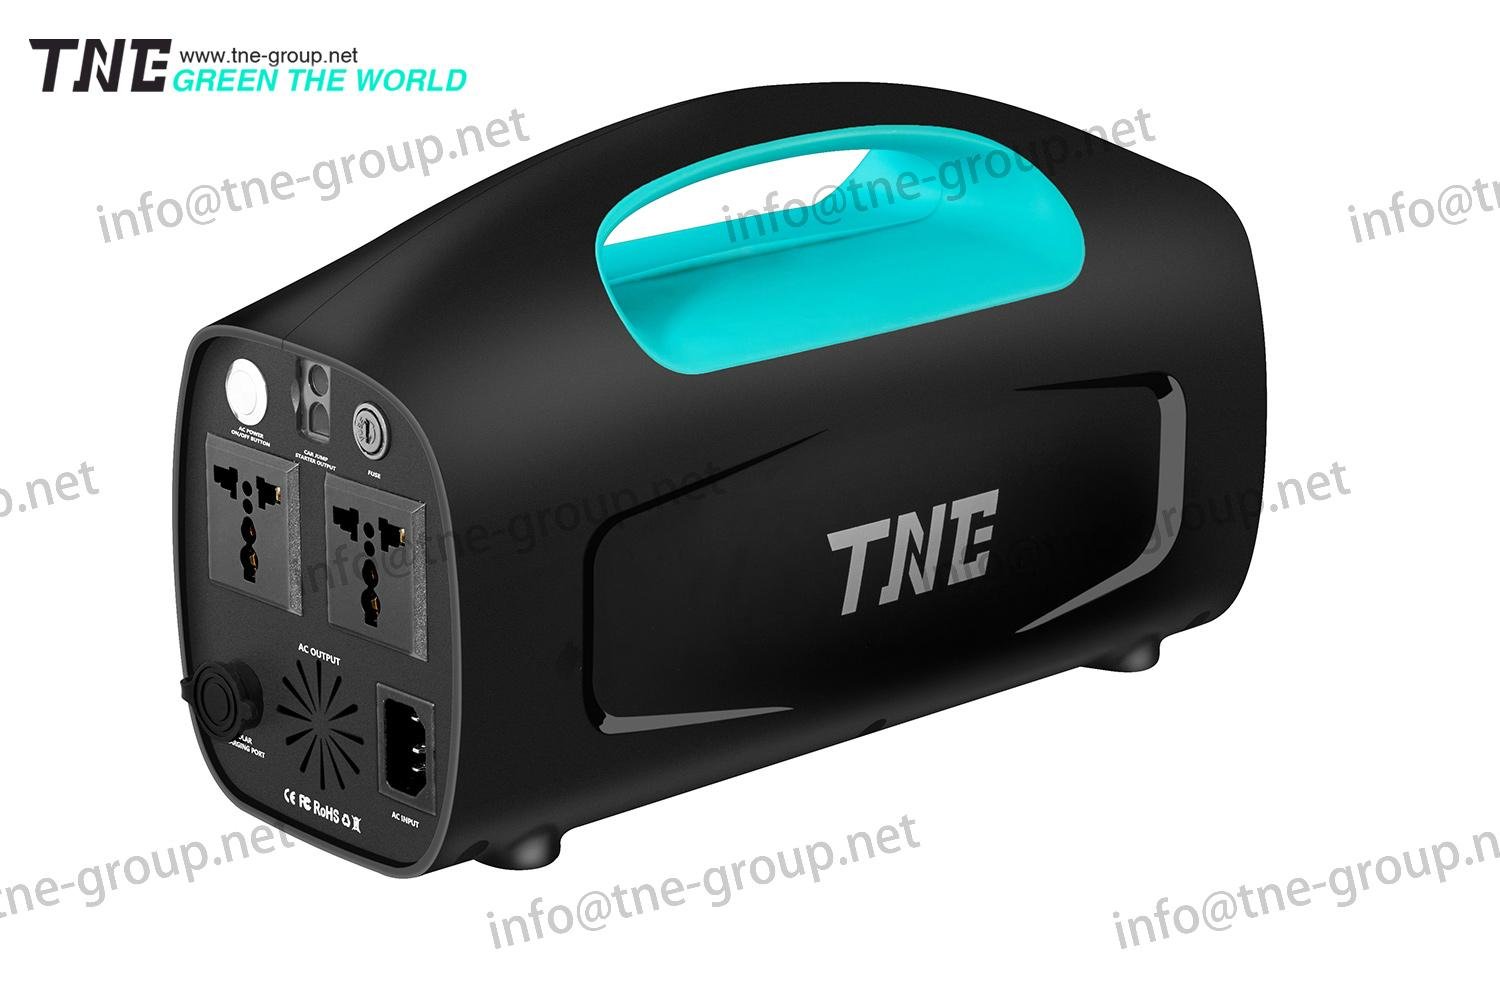 TNE solar online high frequency mini ups tportable generator power bank 2